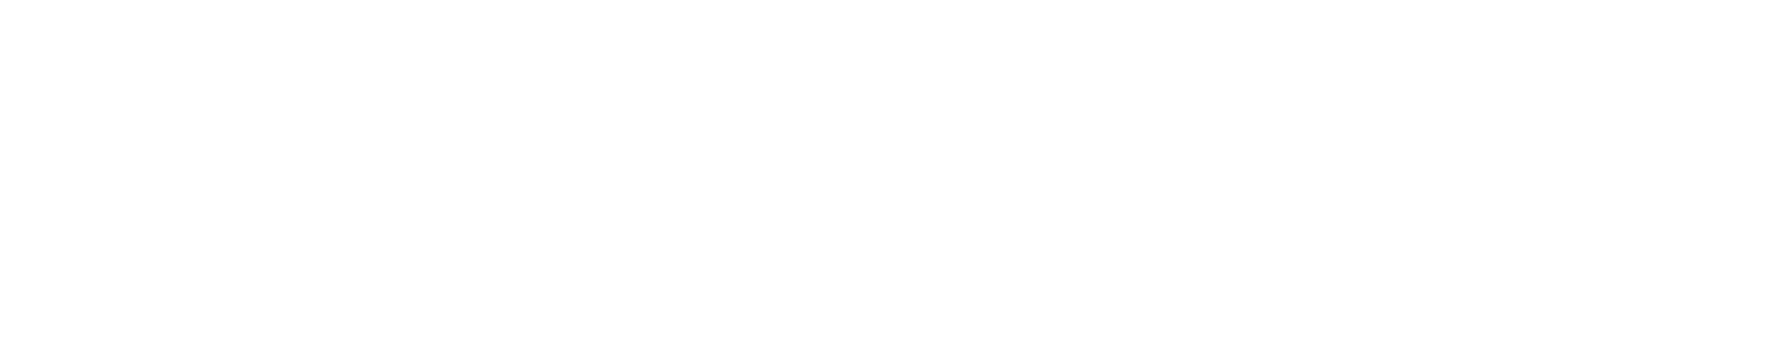 Peoria Plumbing Pros